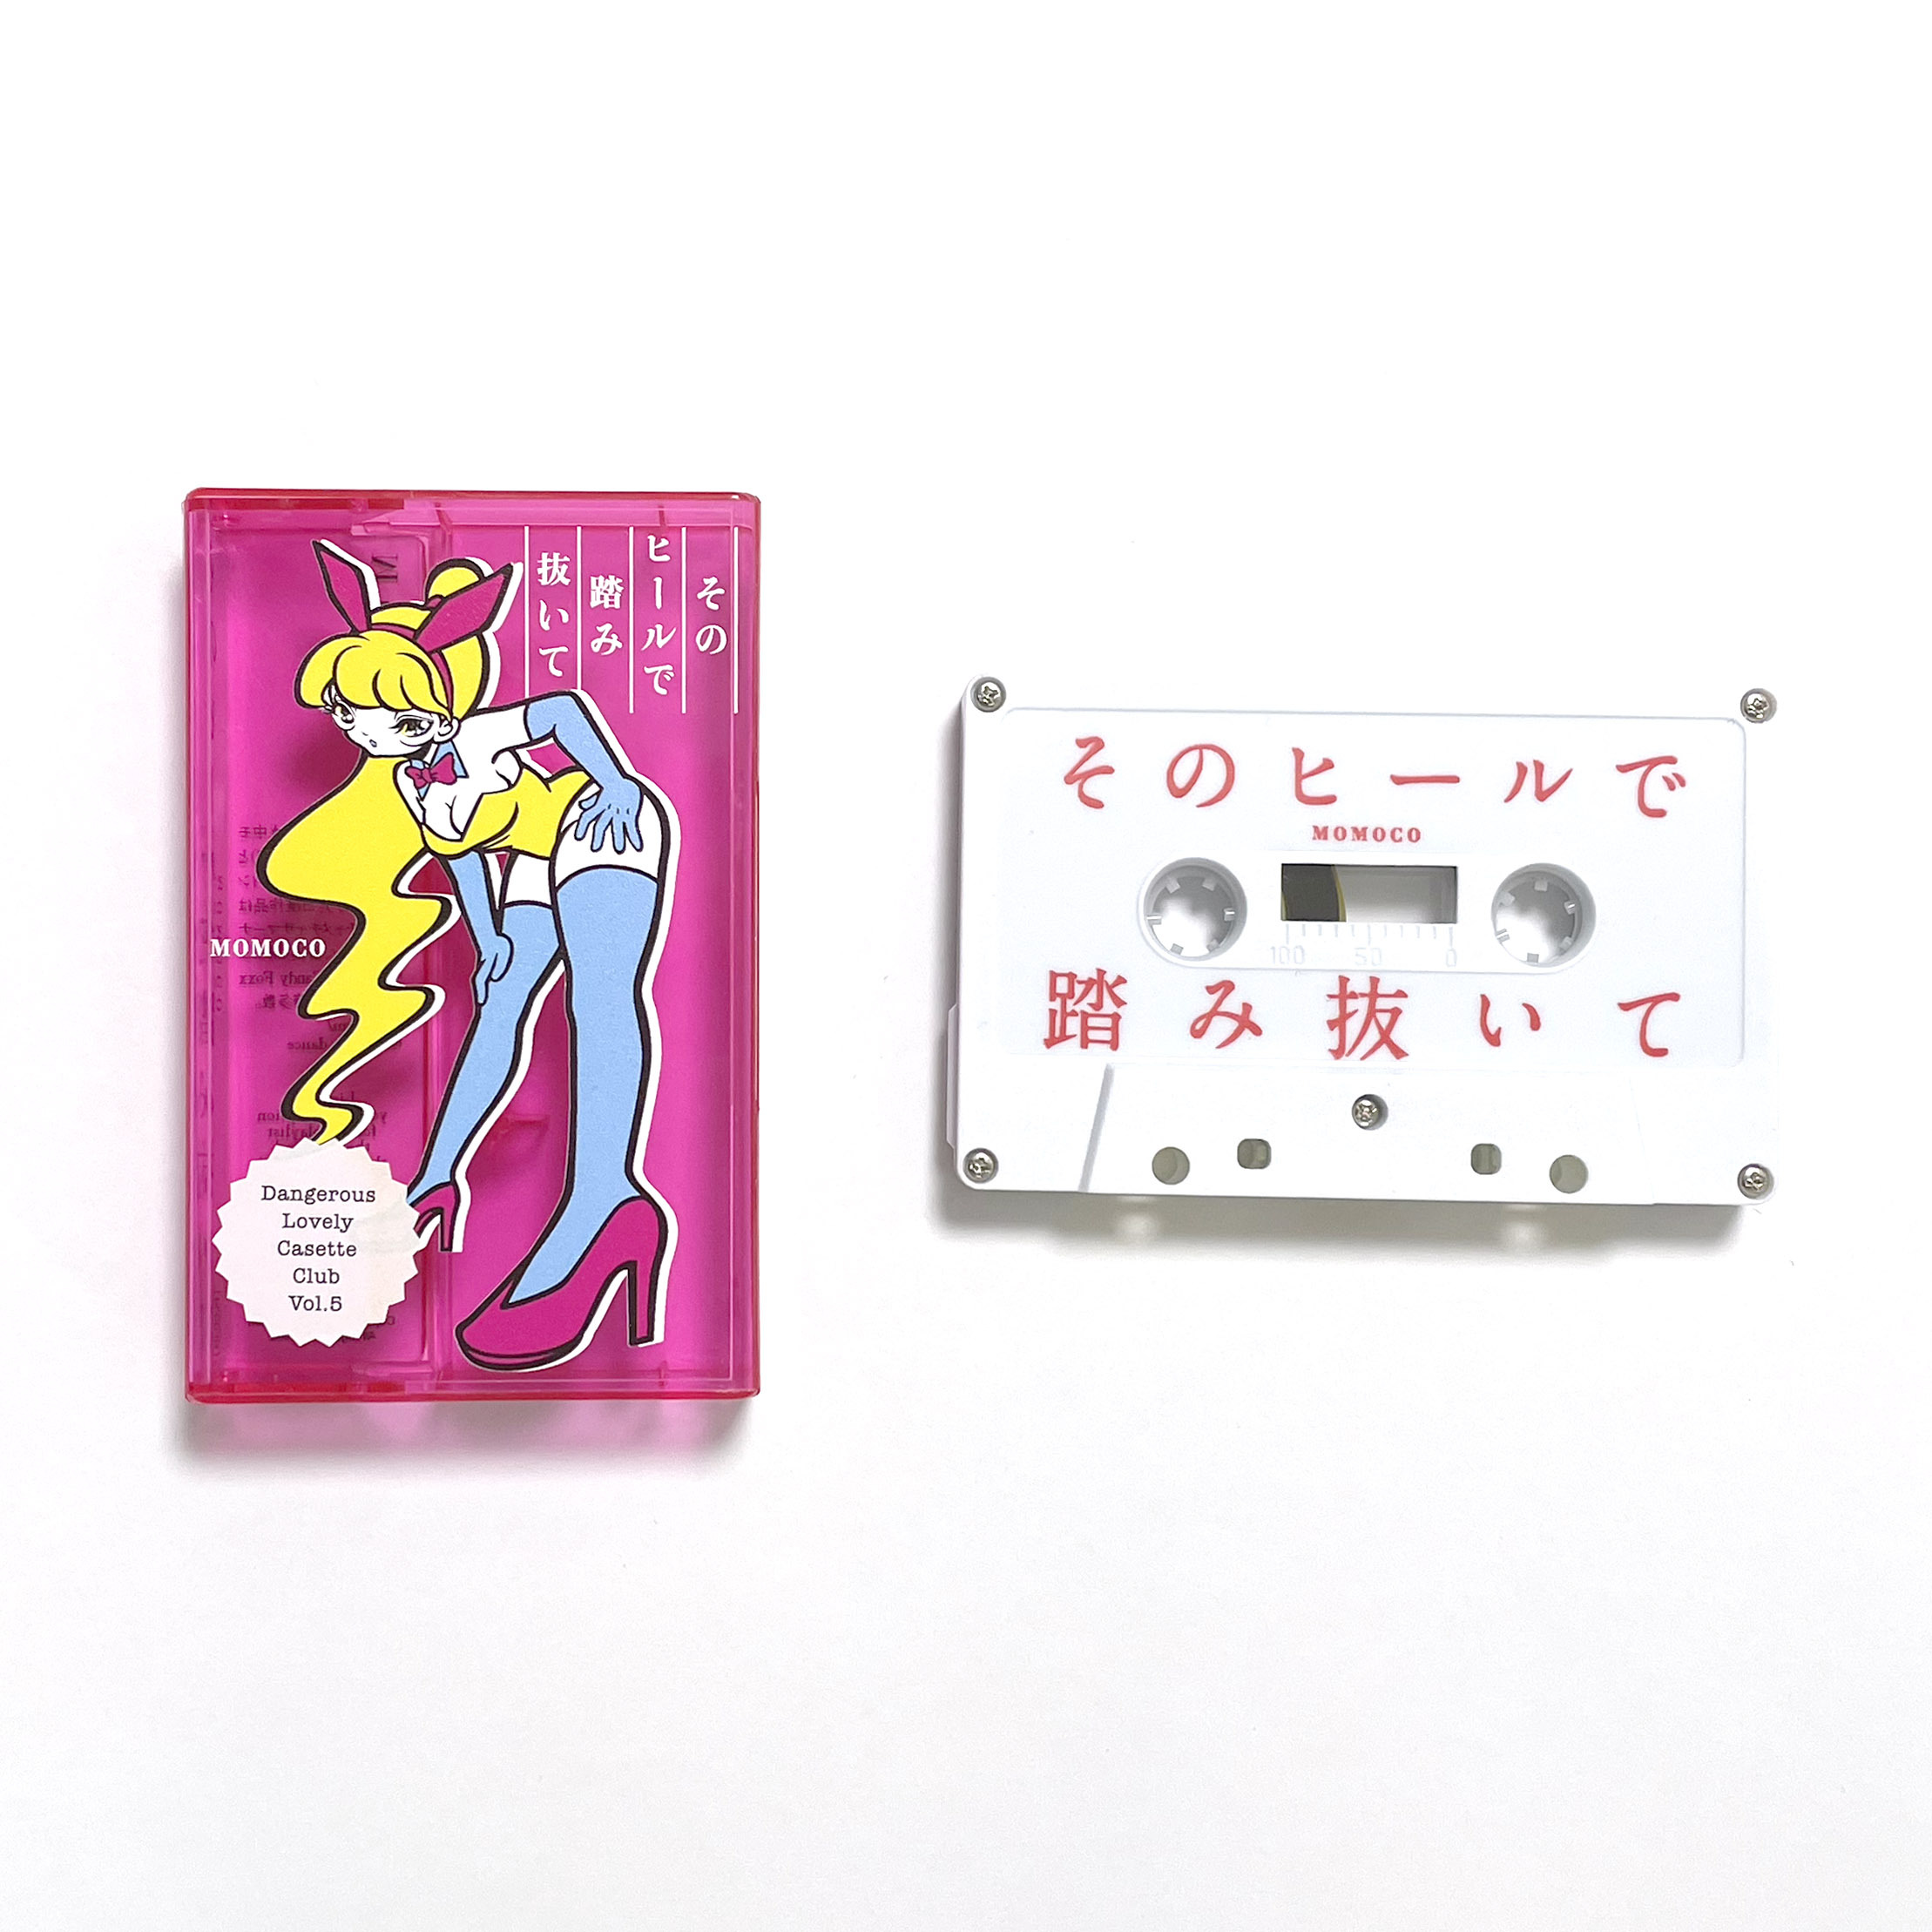 Dangerous Lovely Cassete Club Vol 05 Momoco そのヒールで踏み抜いて Miseinen Online Shop